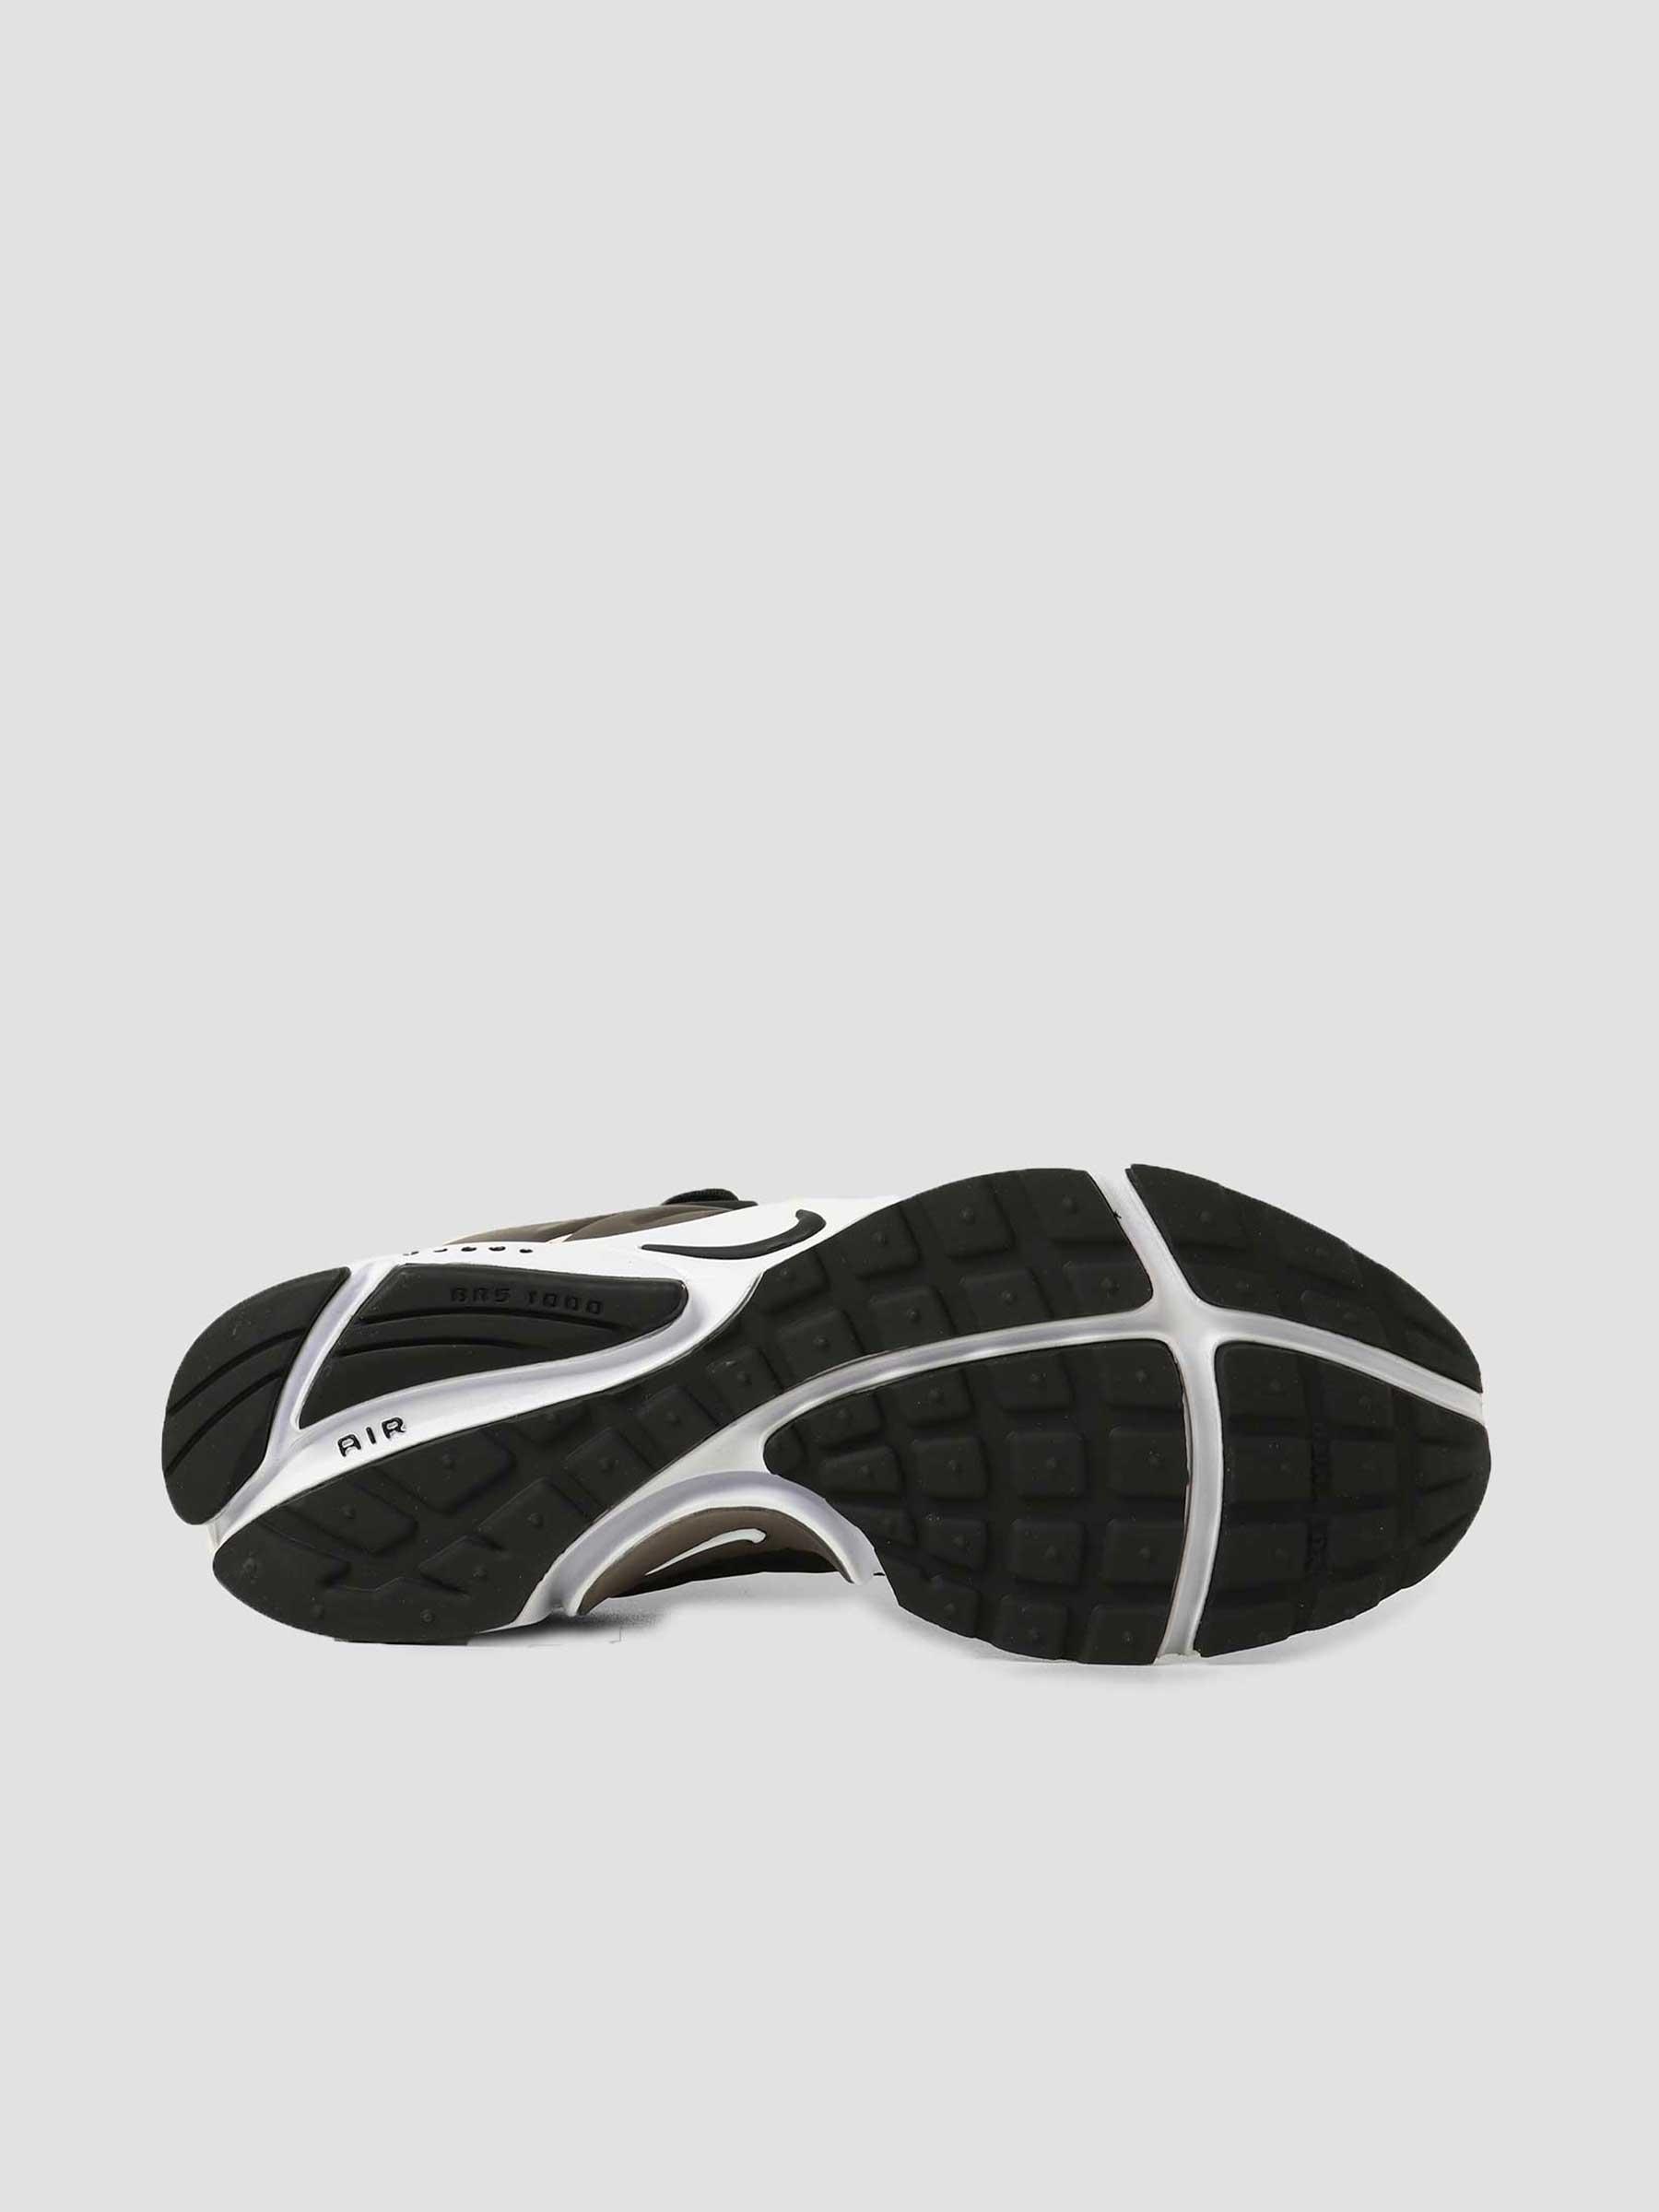 Nike Air Presto Black Black-White CT3550-001